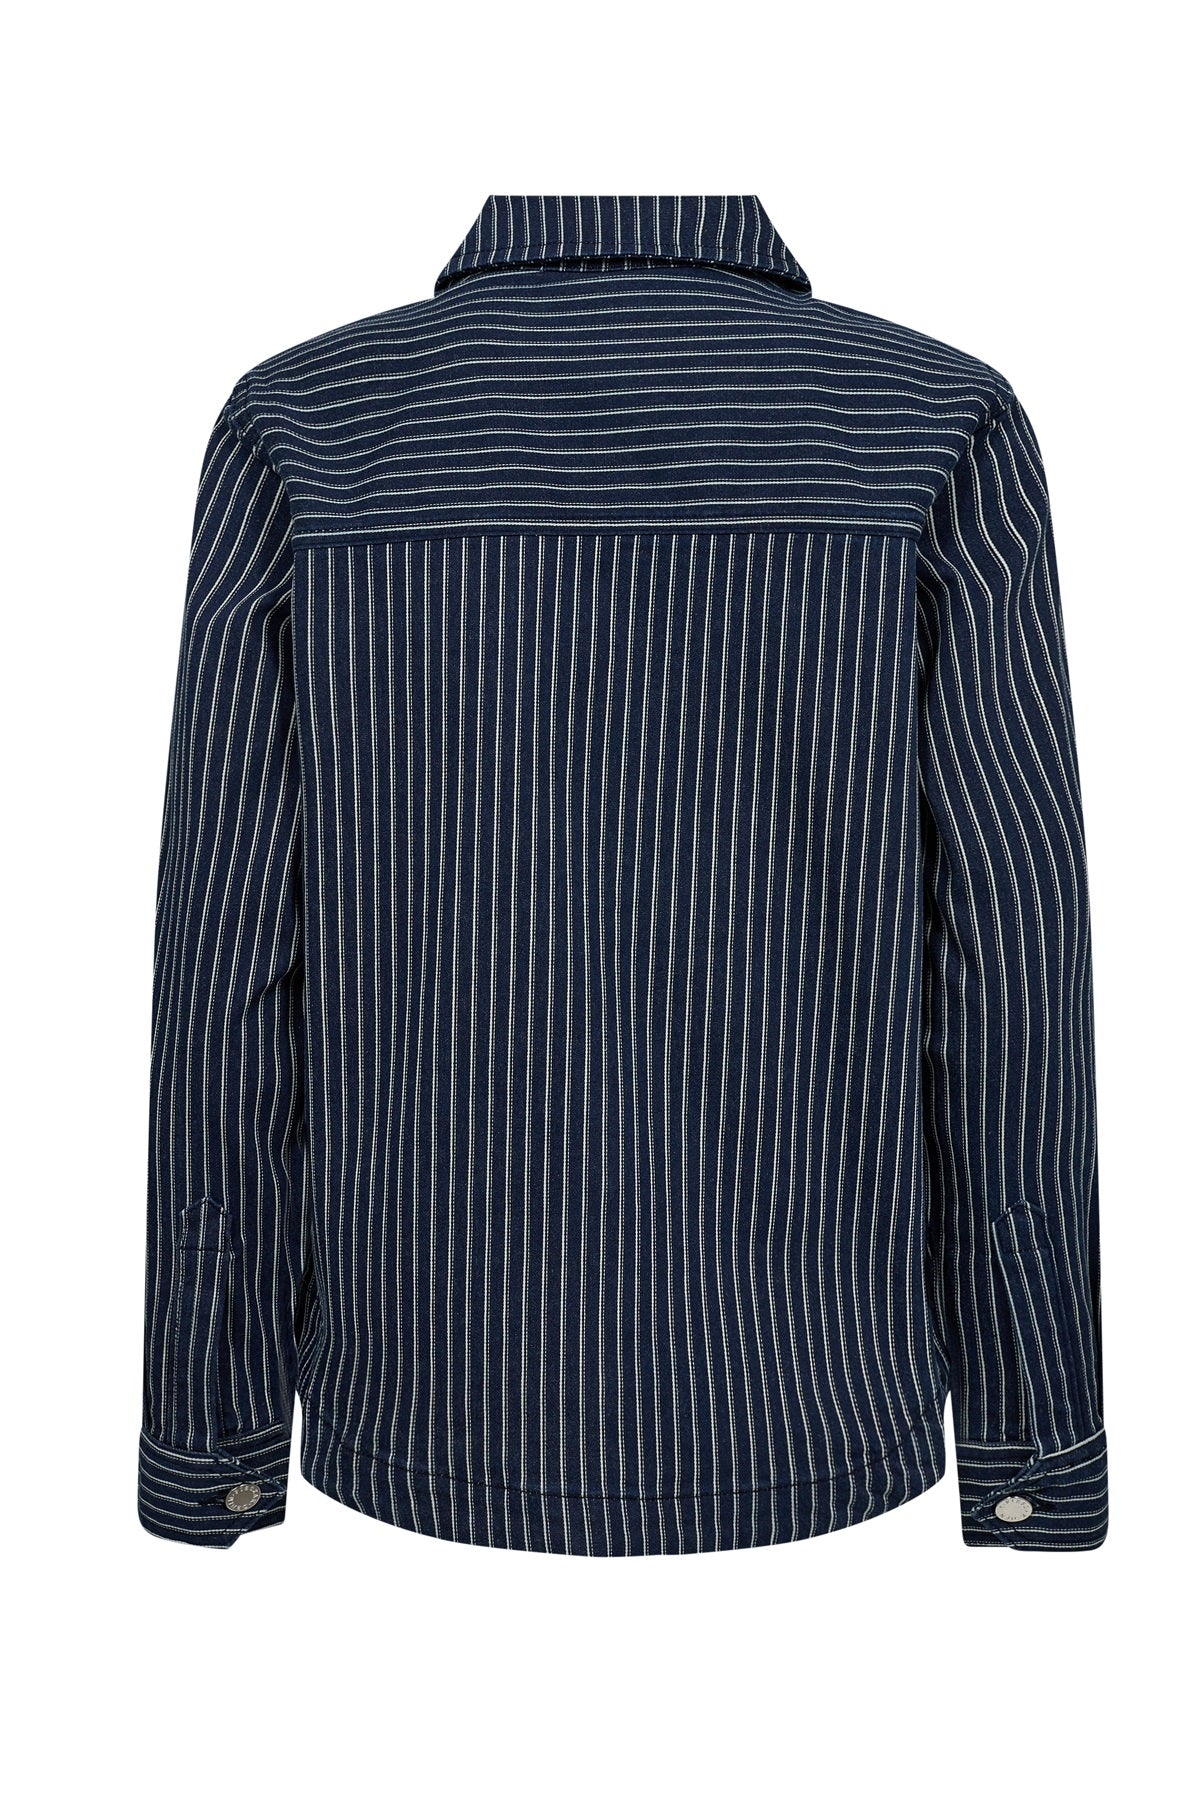 Pieszak Gigi Shirt Rimini Stripe, Denim Blue